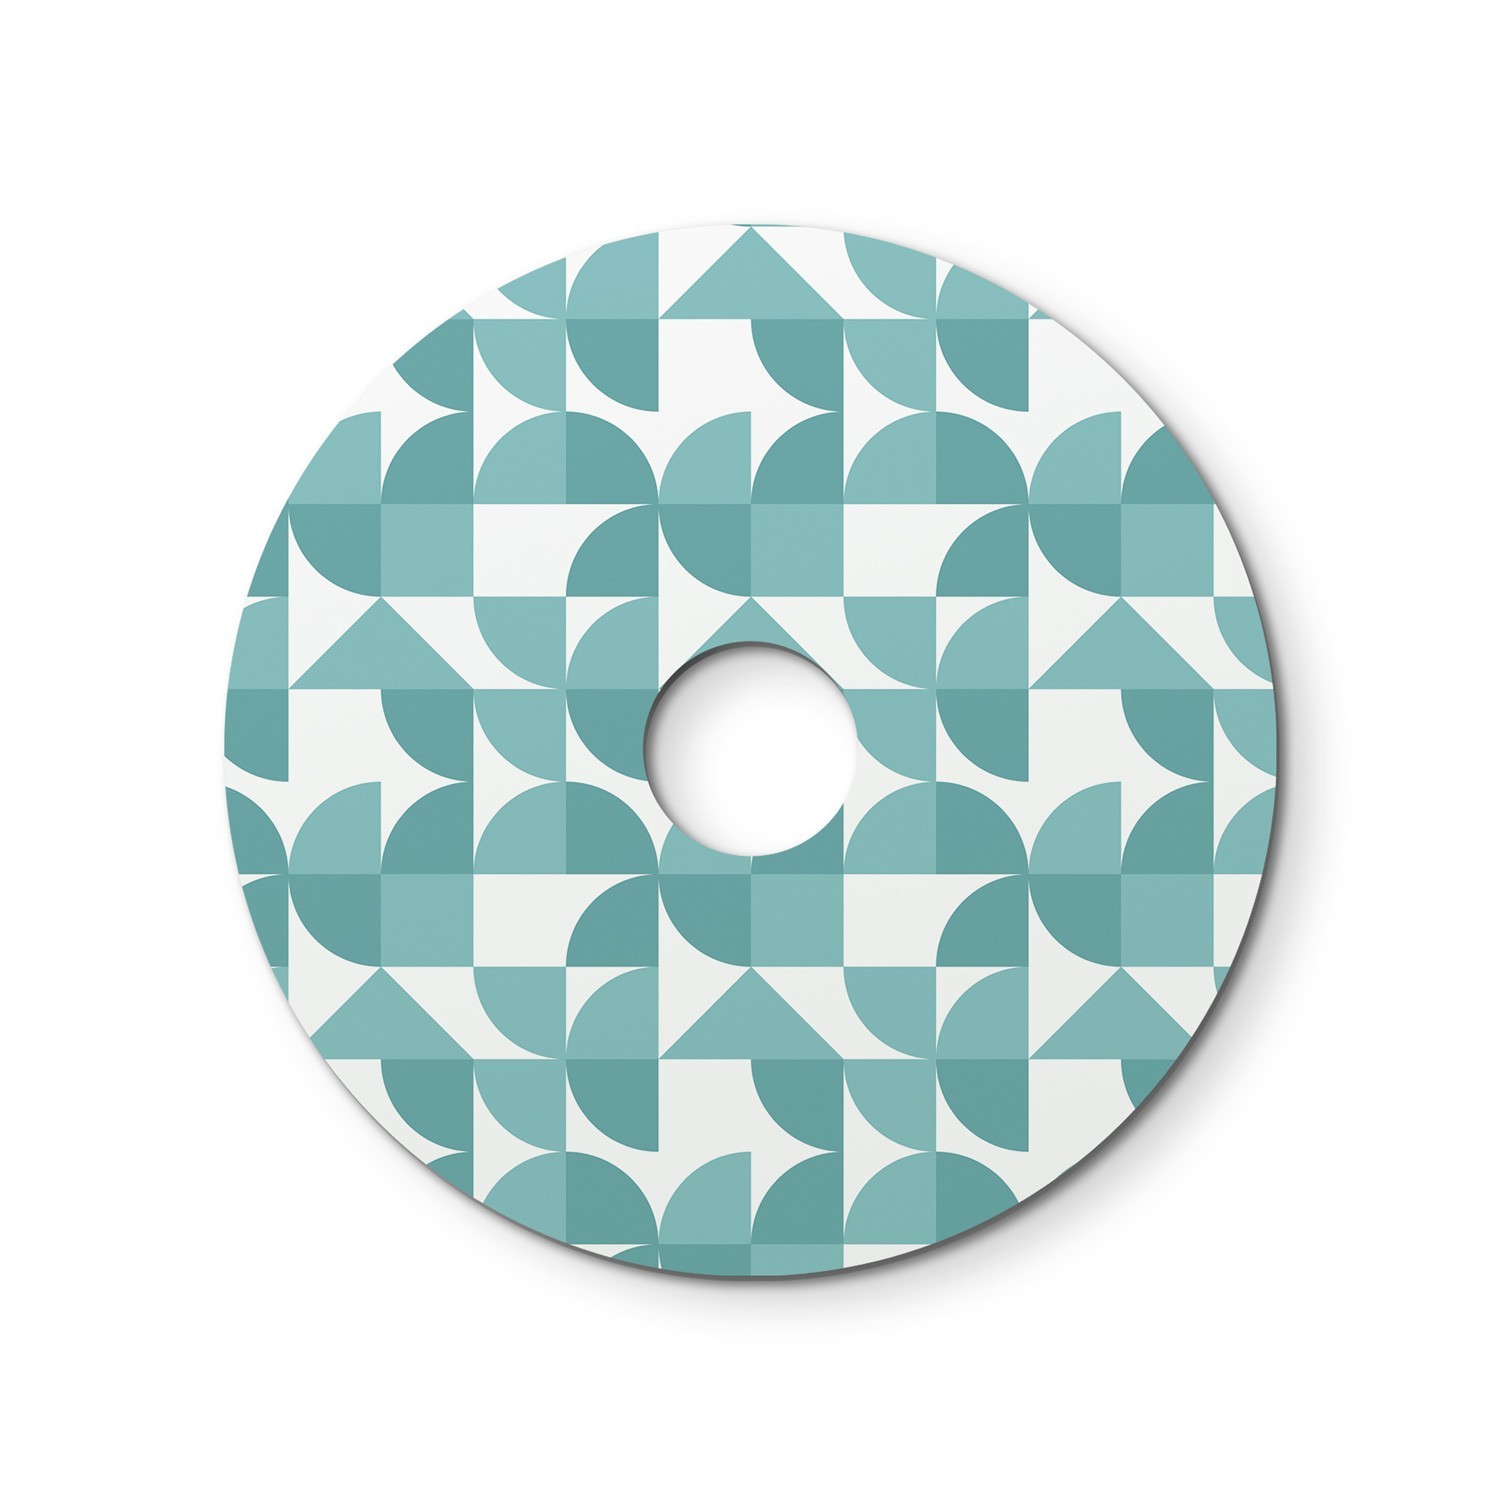 Pantalla mini plato Ellepì con motivos geométricos 'Kaleidoscope', diámetro 24 cm - Made in Italy